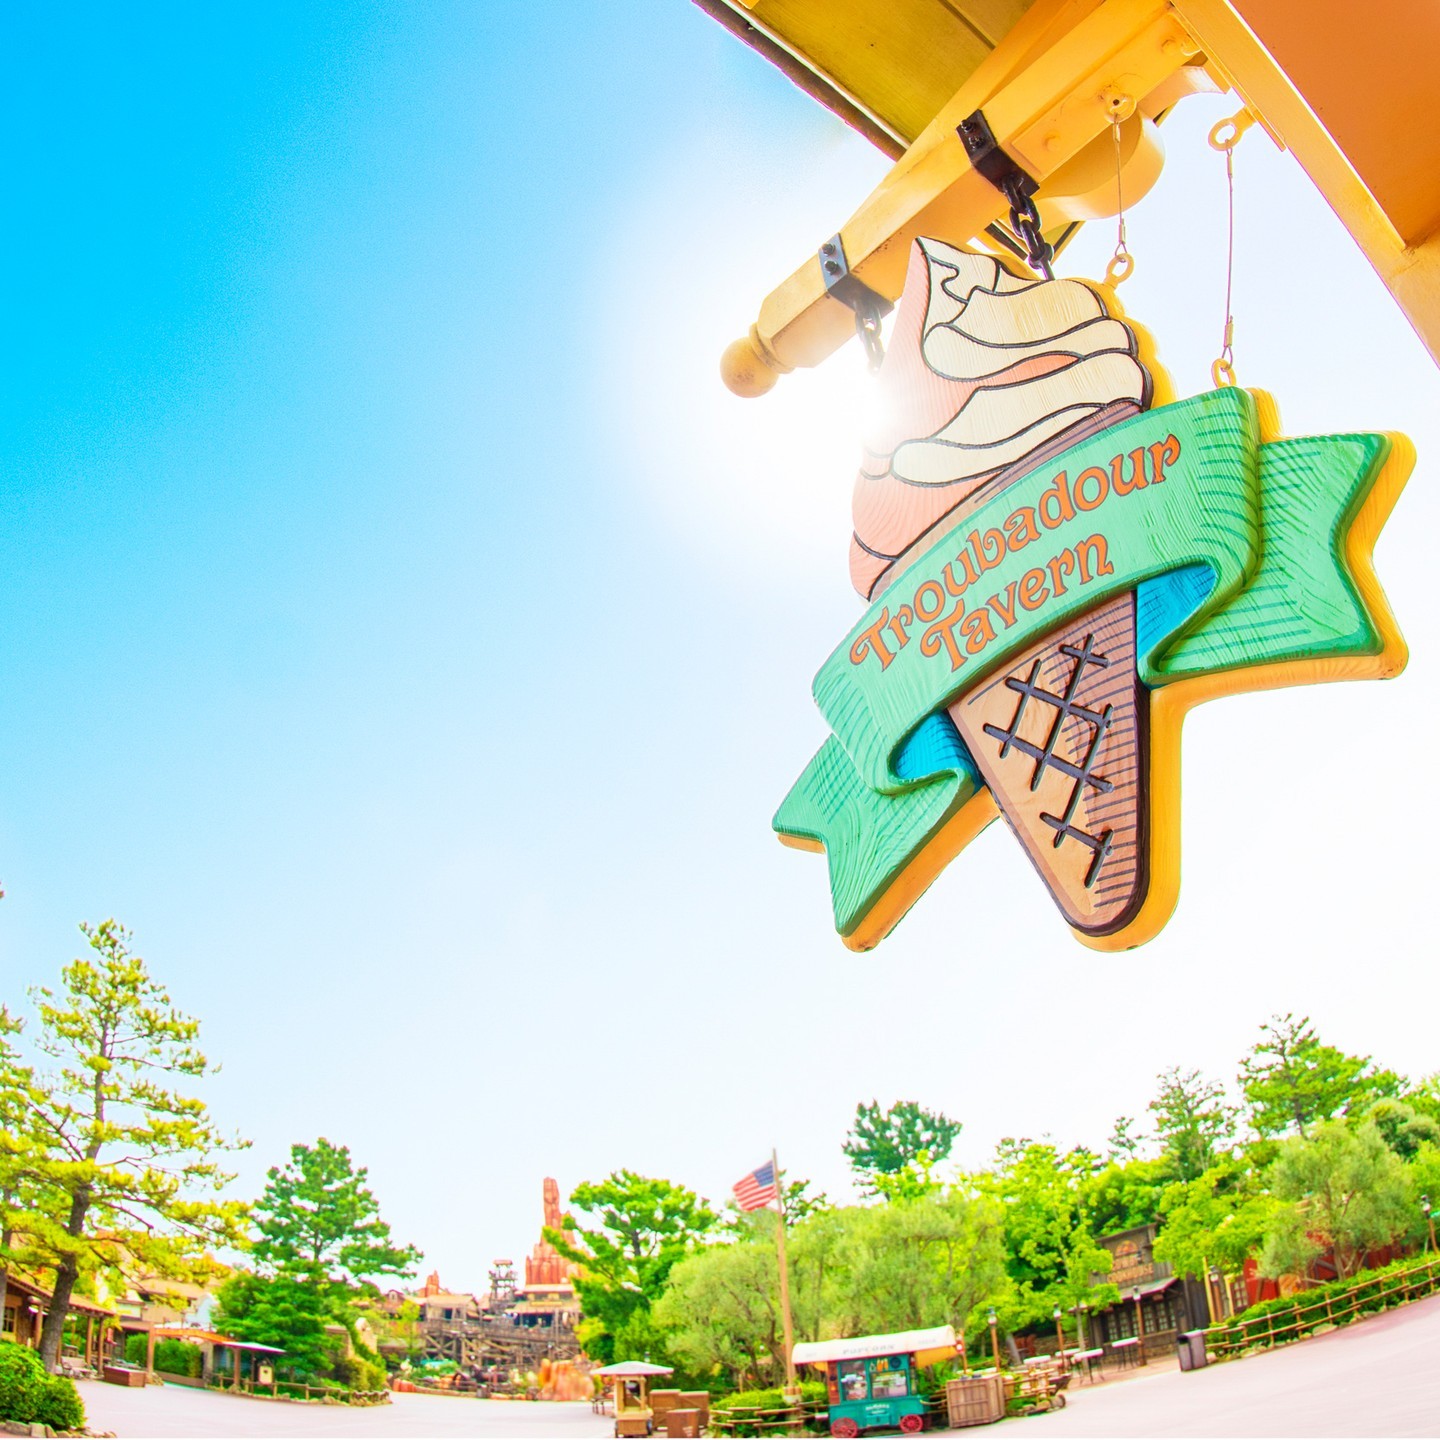 image of Ice cream is the best way to cool the heat!
暑さを吹き飛ばそう！
#icecream #troubadourtavern...